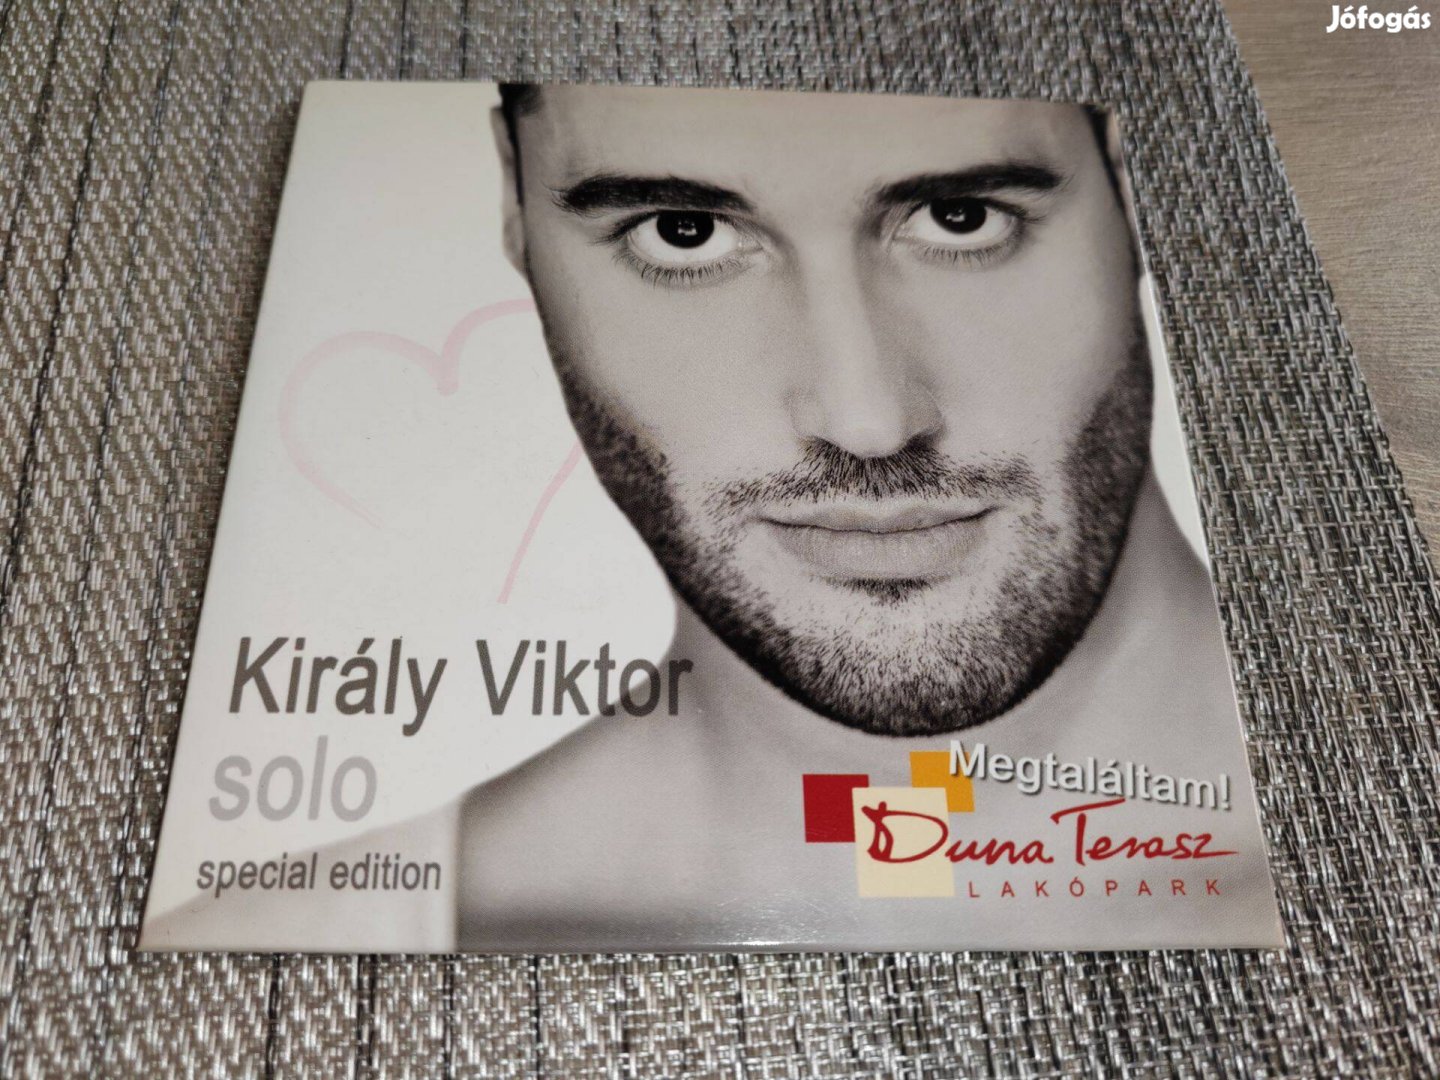 Király Viktor Solo maxi cd